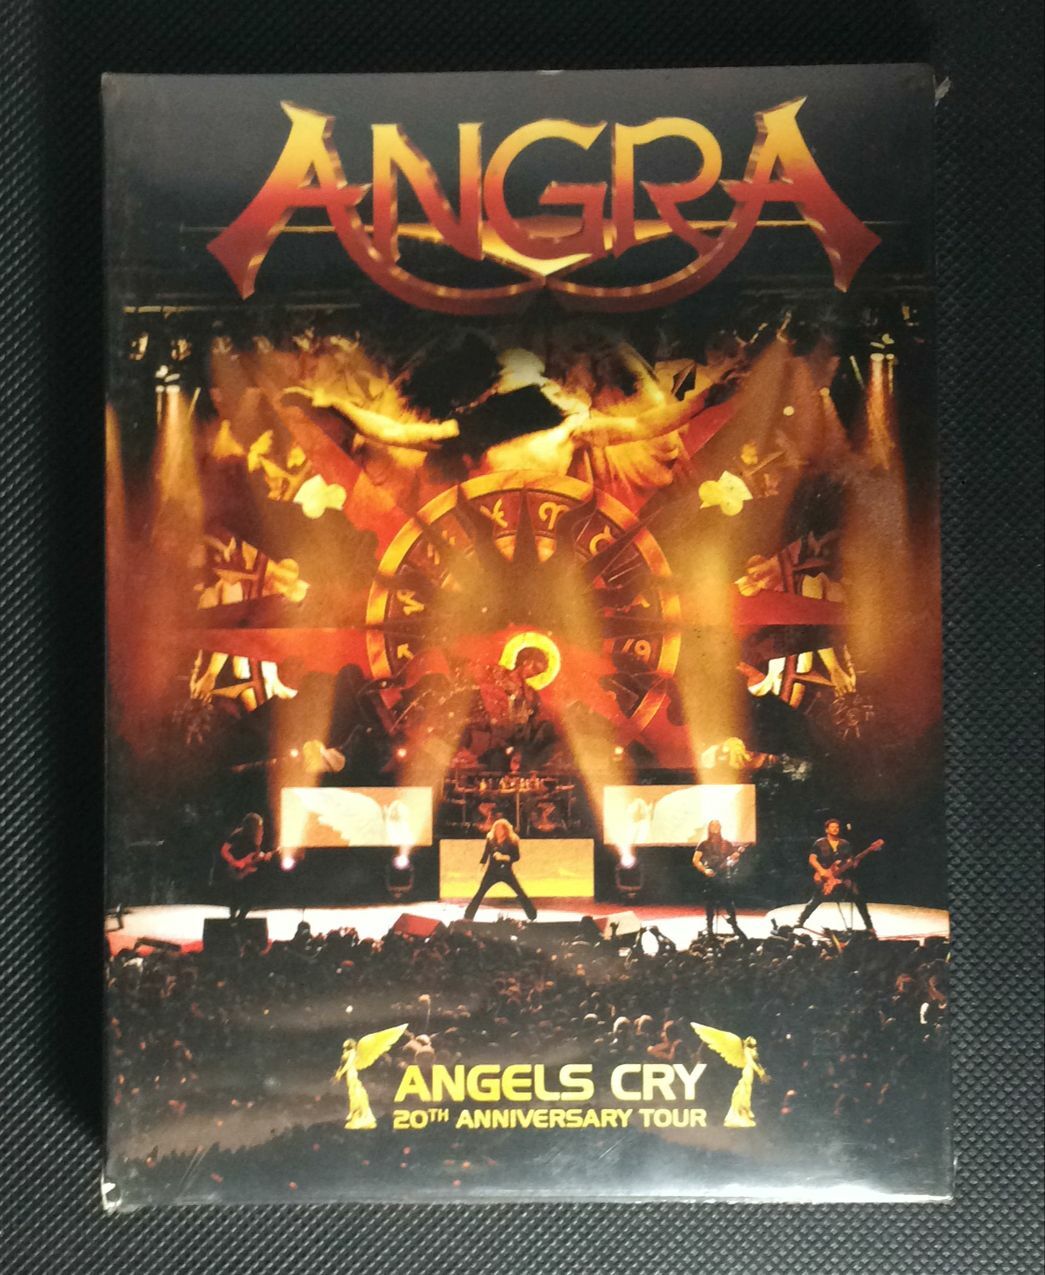 DVD - Angra - Angels Cry 20th Anniversary Tour (DVD+CD / Lacrado / Digipack)